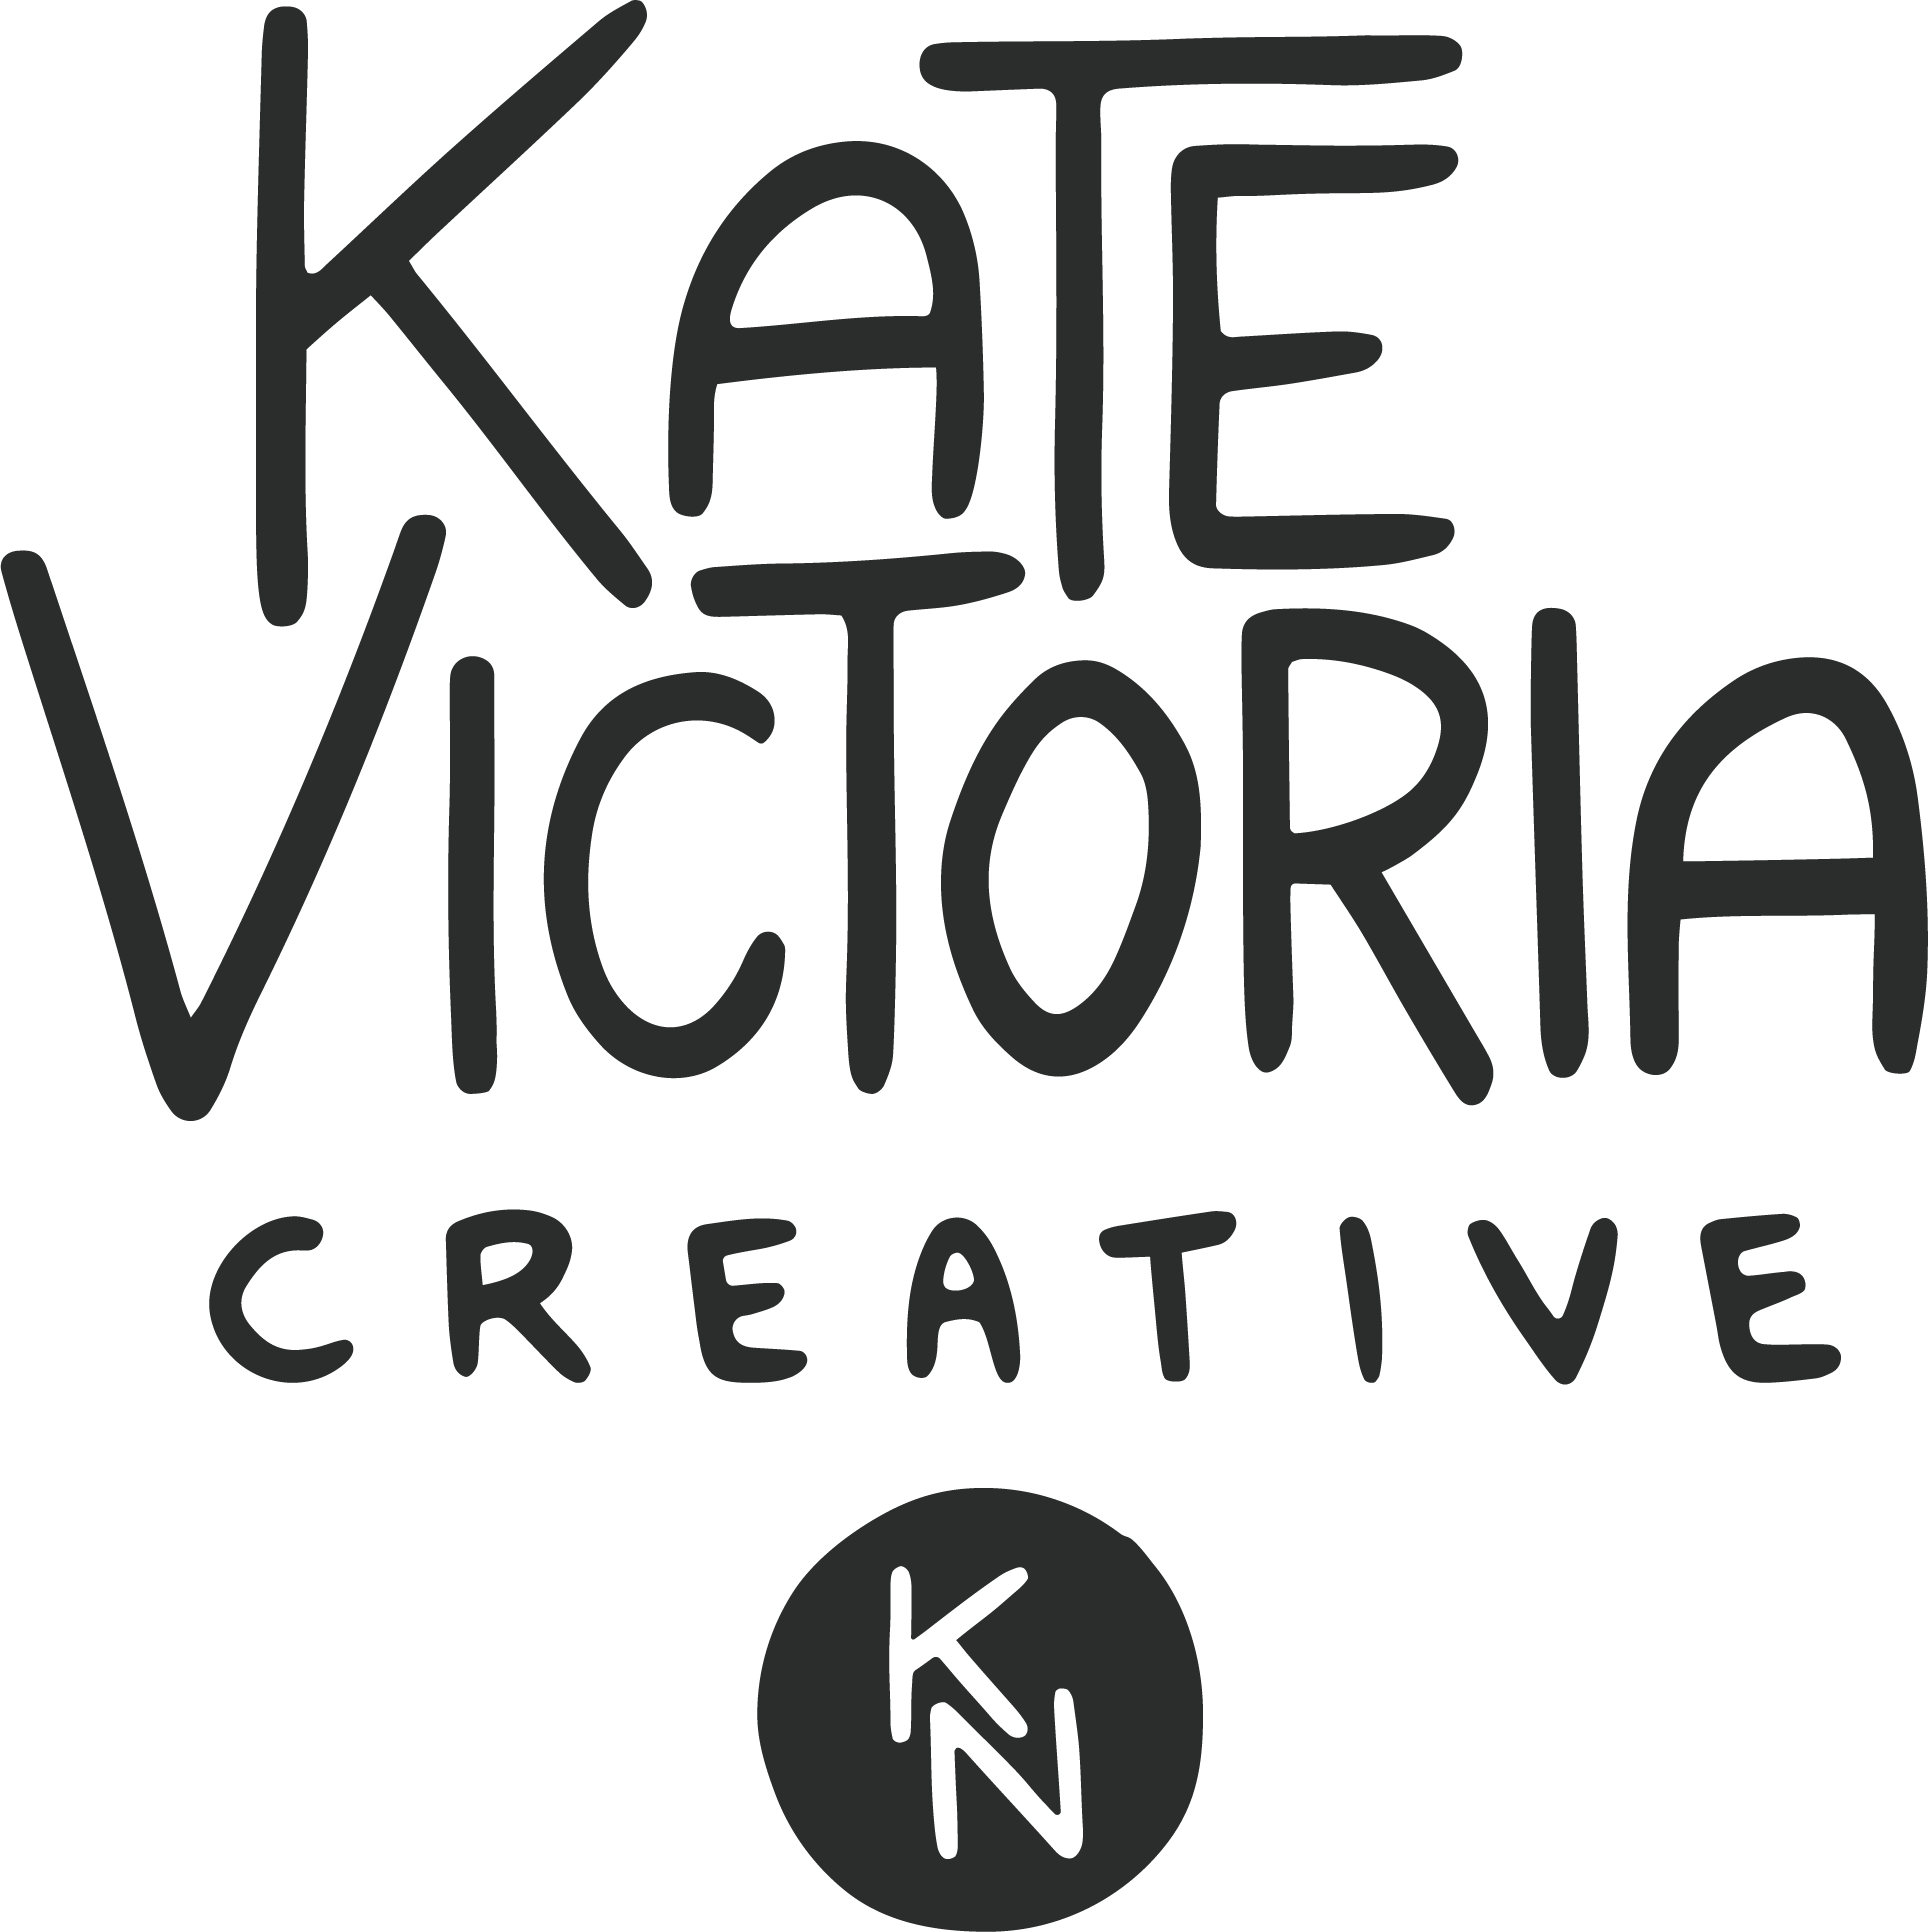 Kate Victoria Creative